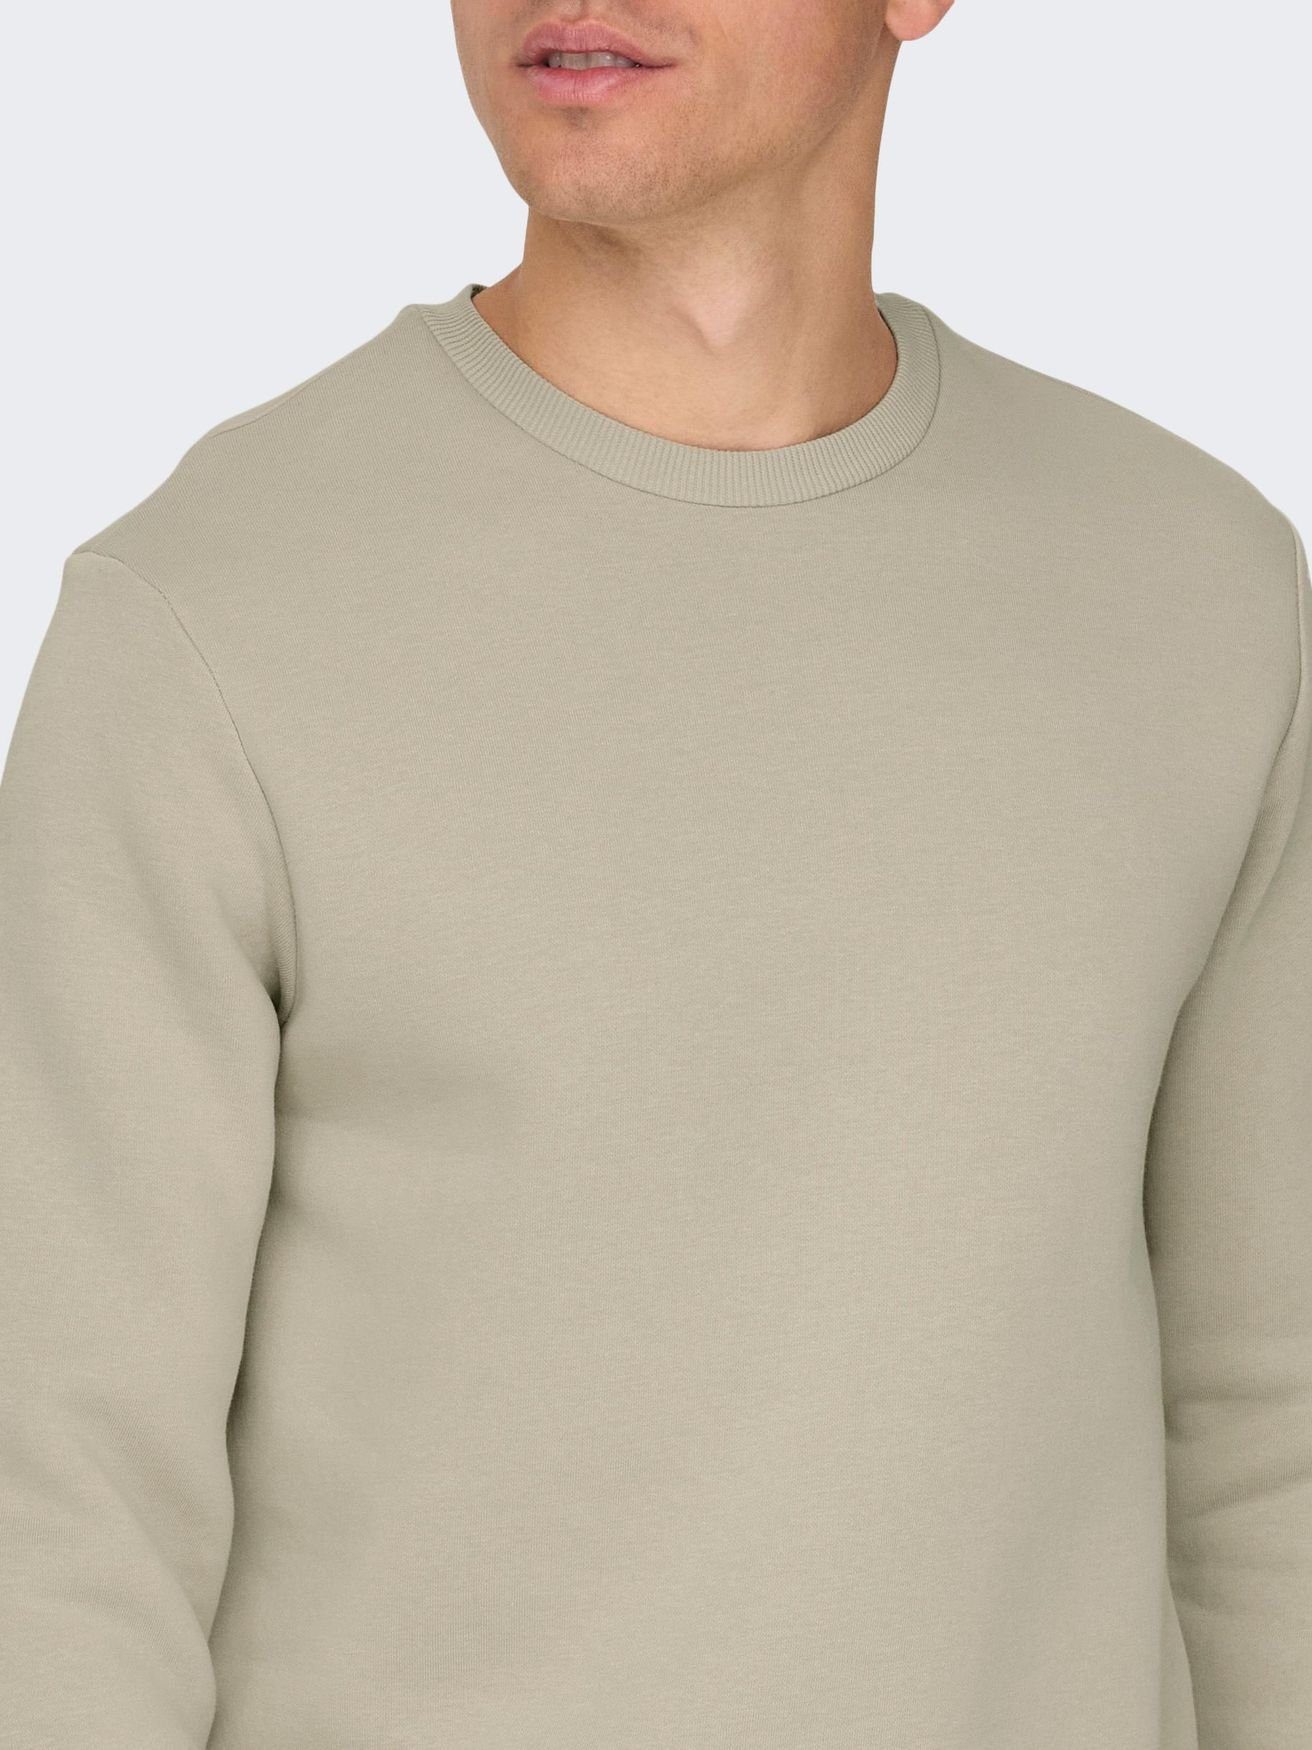 & ONLY SONS Pullover 5428 ONSCERES Sweatshirt Basic ohne Sweatshirt in Kapuze Langarm Beige-2